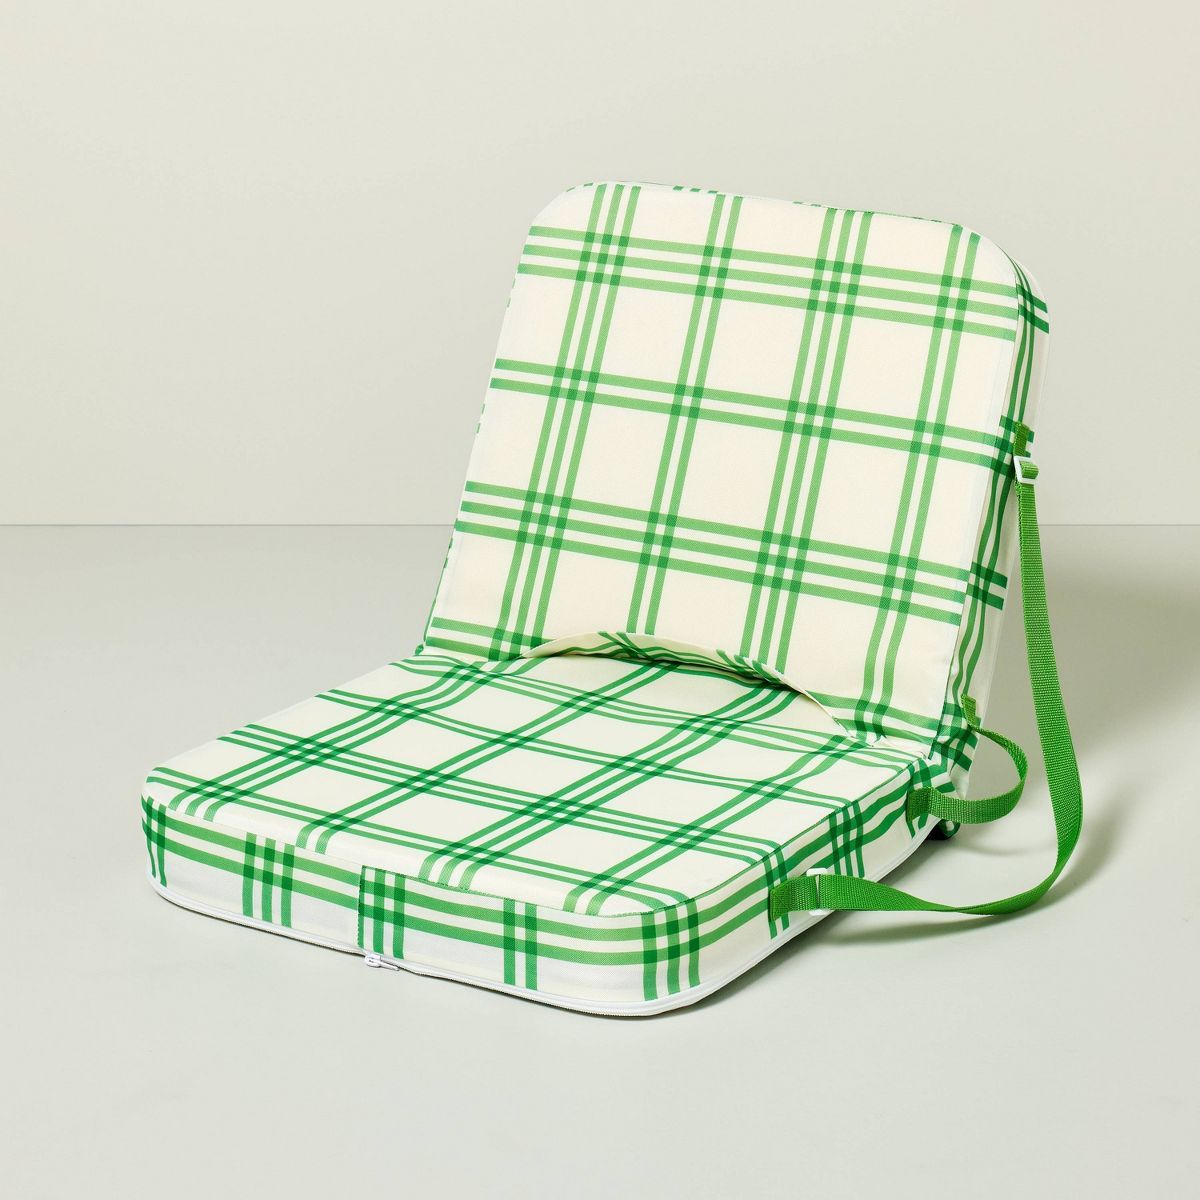 Tri-Stripe Plaid Adjustable Stadium Seat Green/Cream - Hearth & Hand™ with Magnolia | Target